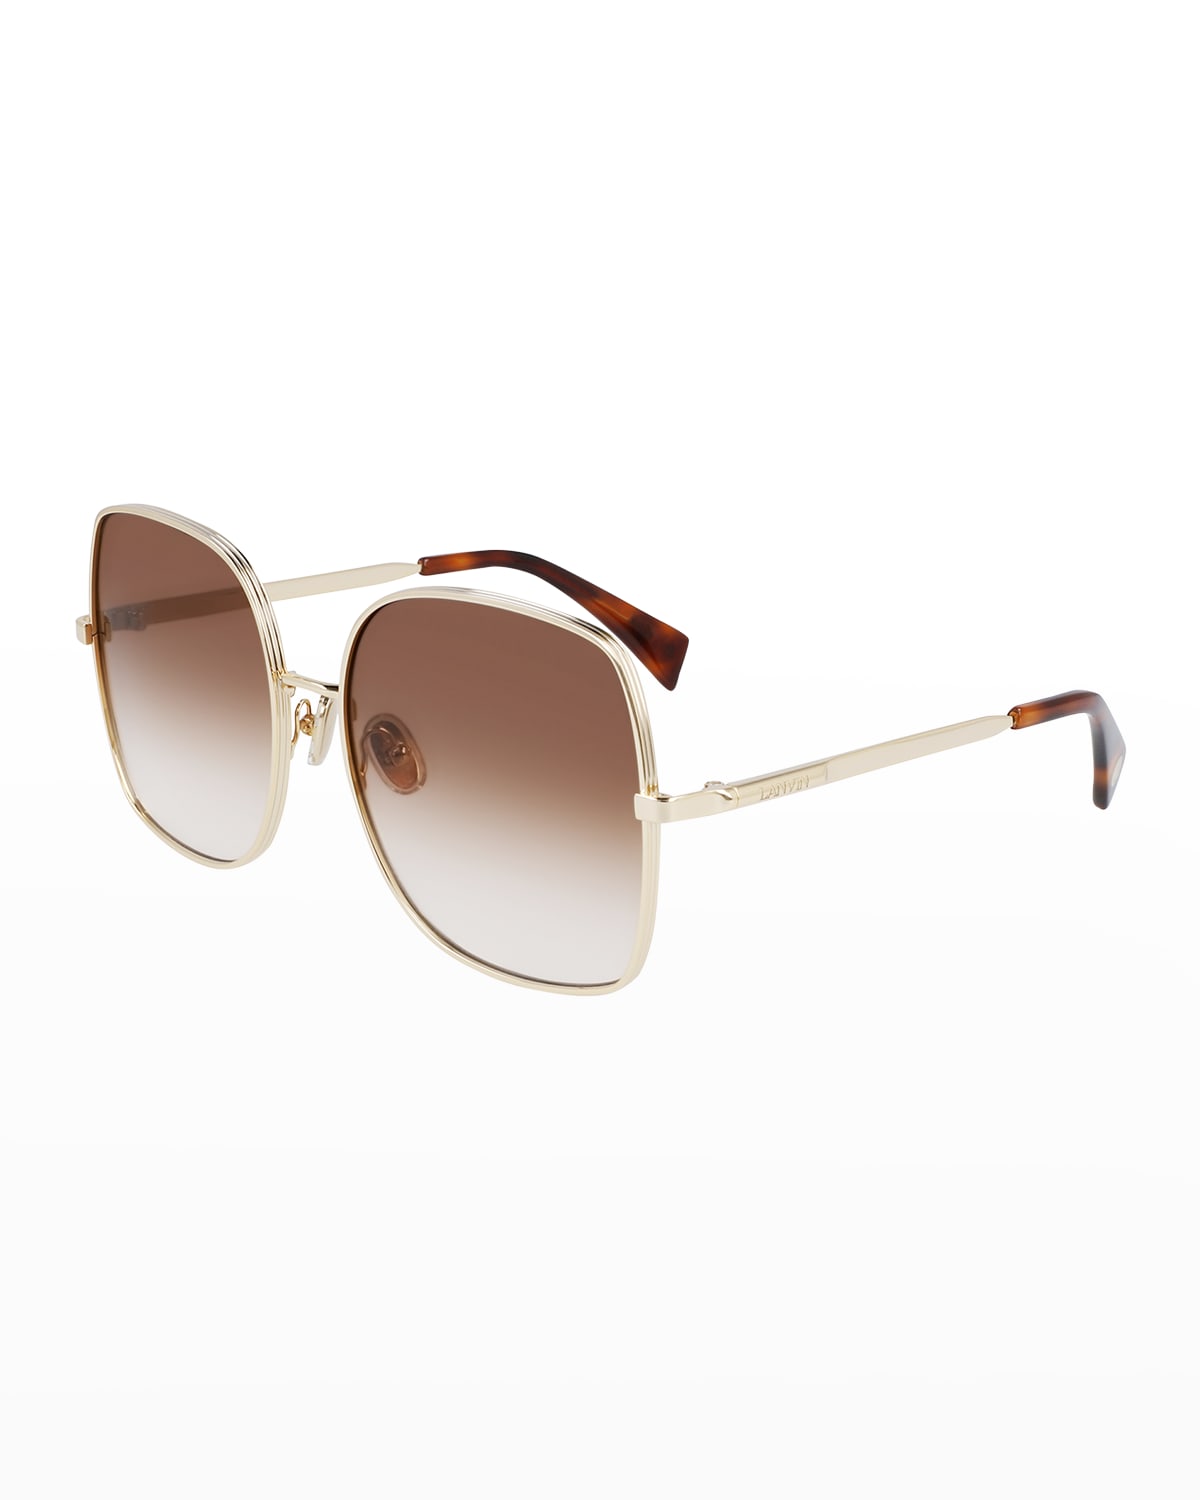 Lanvin Oversized Square Metal Sunglasses In Gold/brown